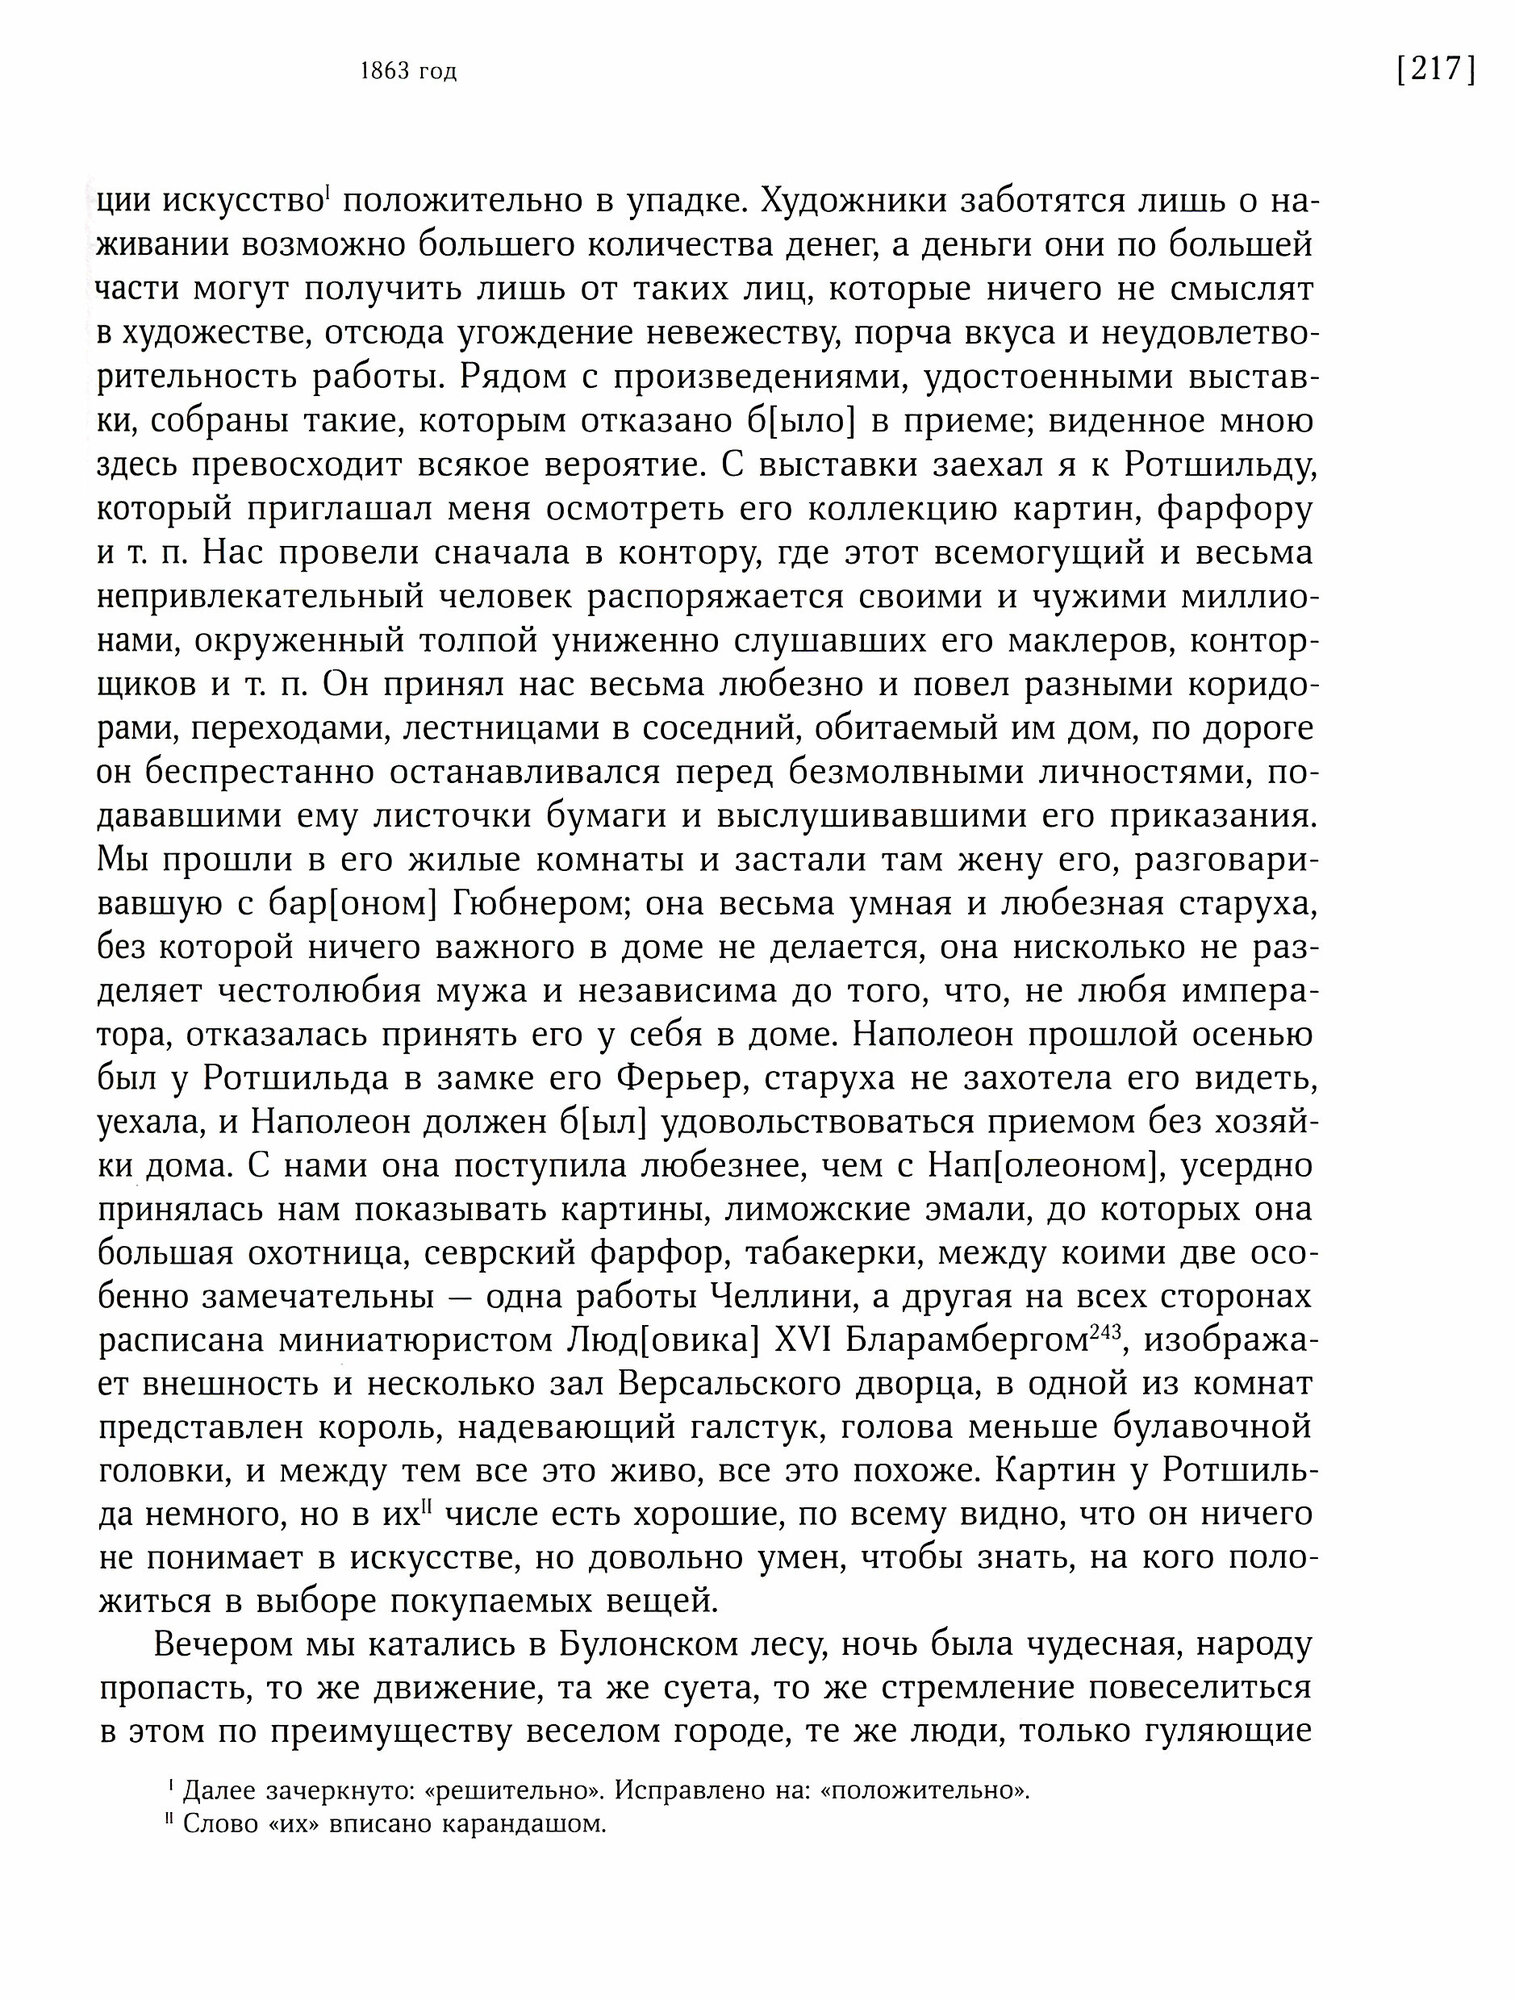 Дневник. 1859–1882 гг. В 2-х томах - фото №3